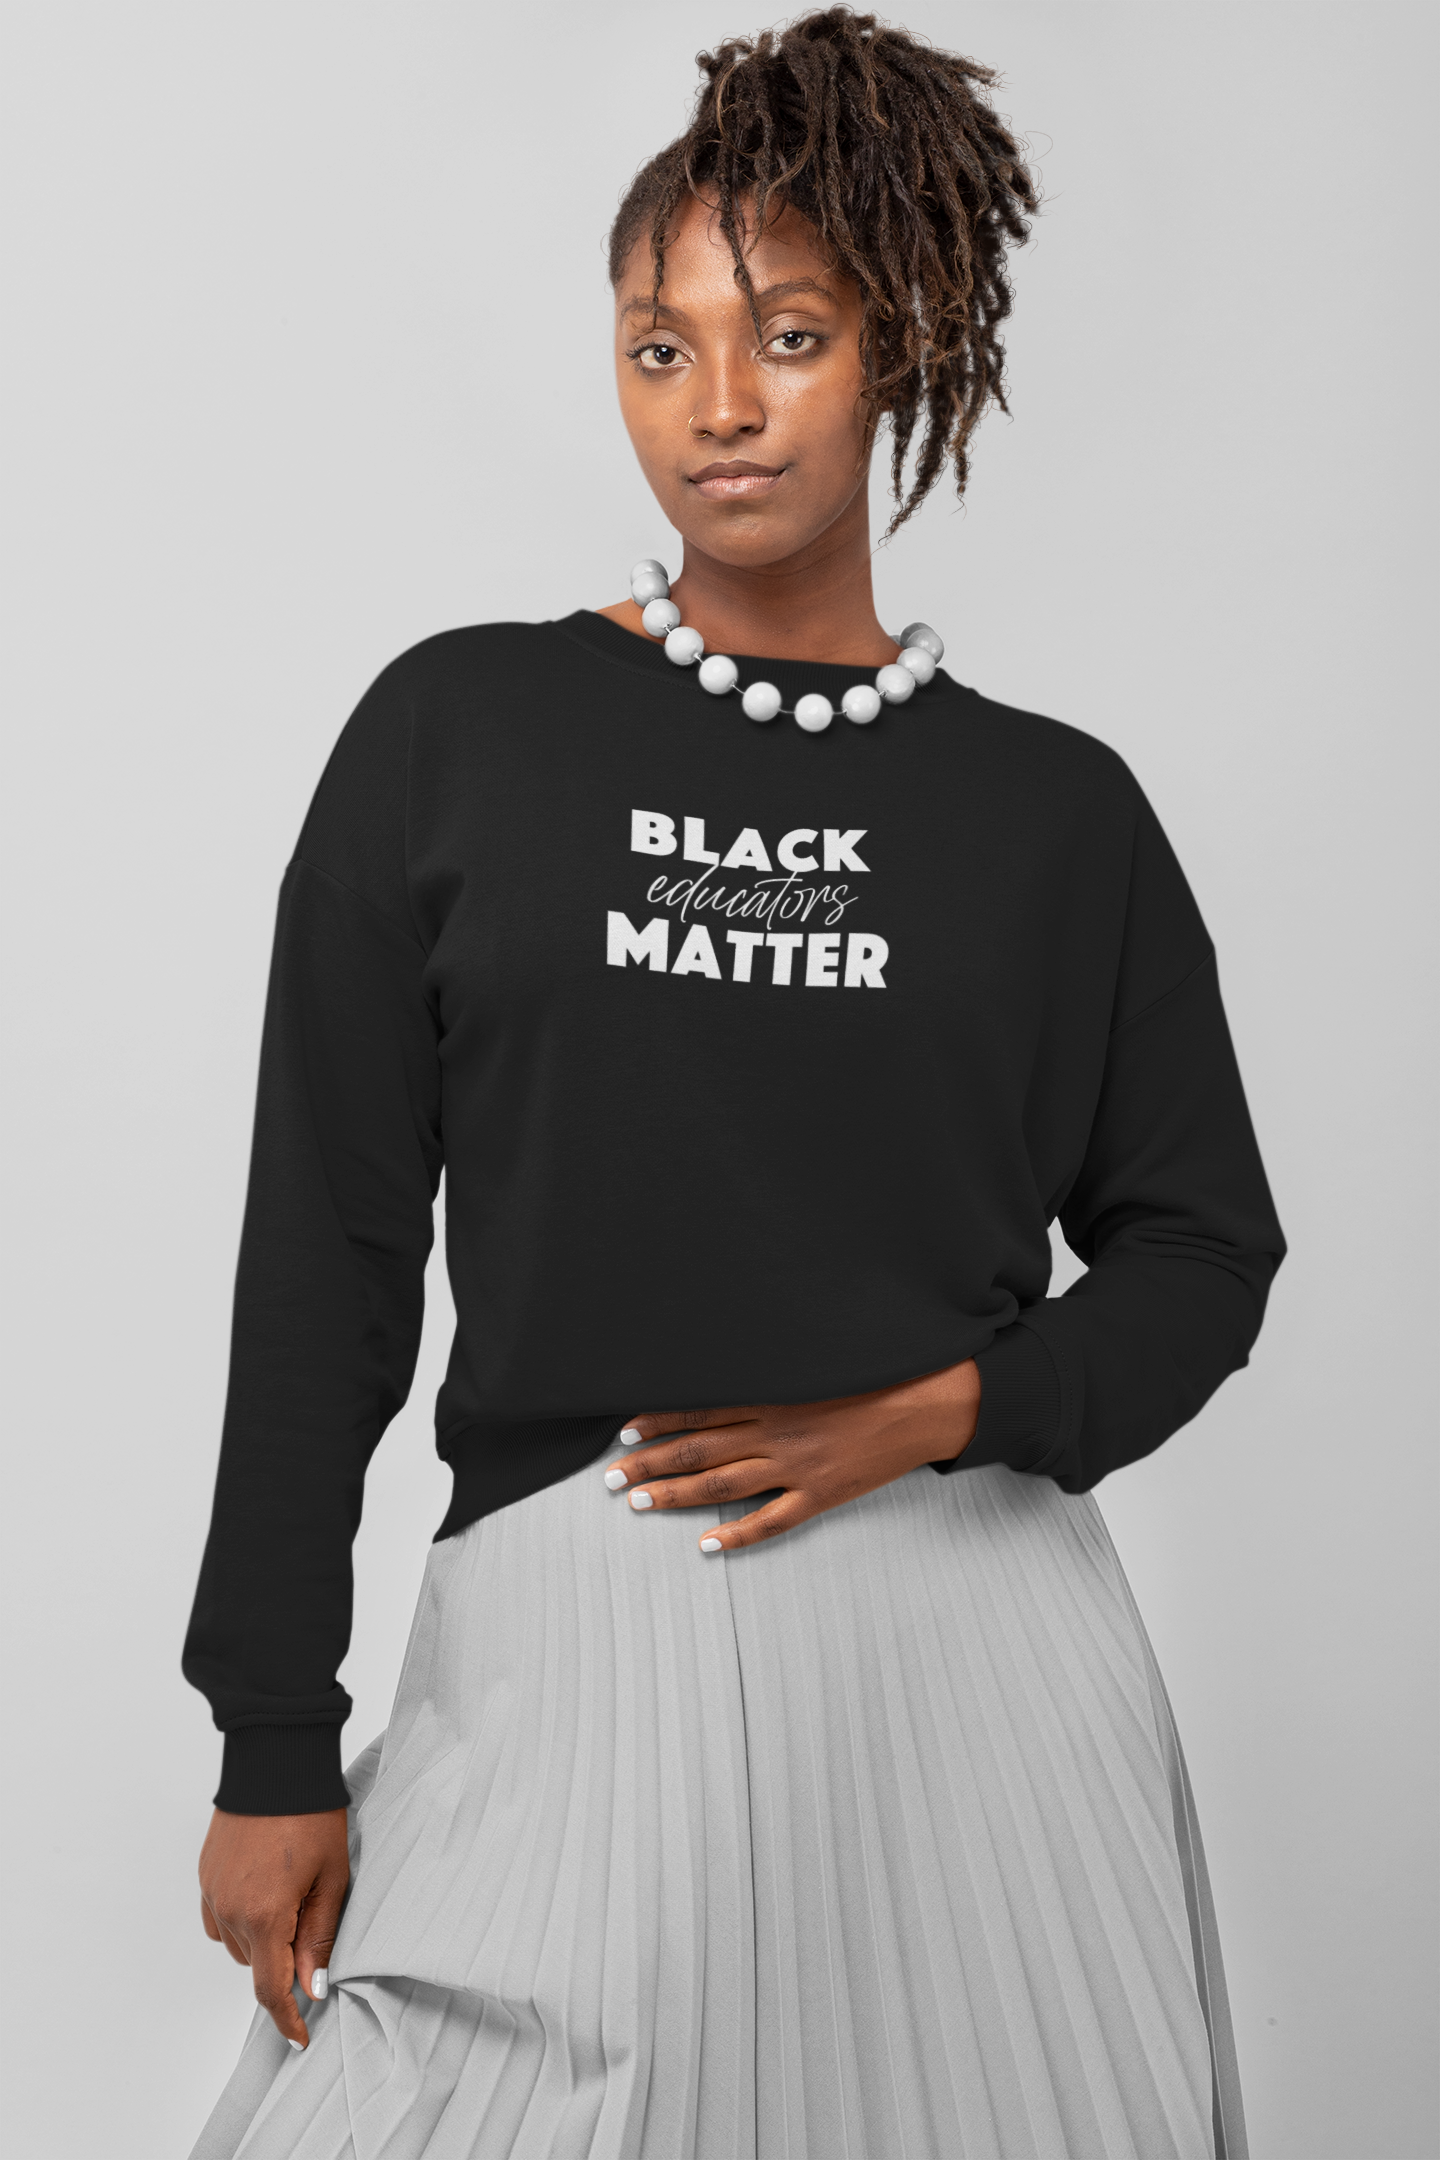 Black Educators Matter Sweatshirt